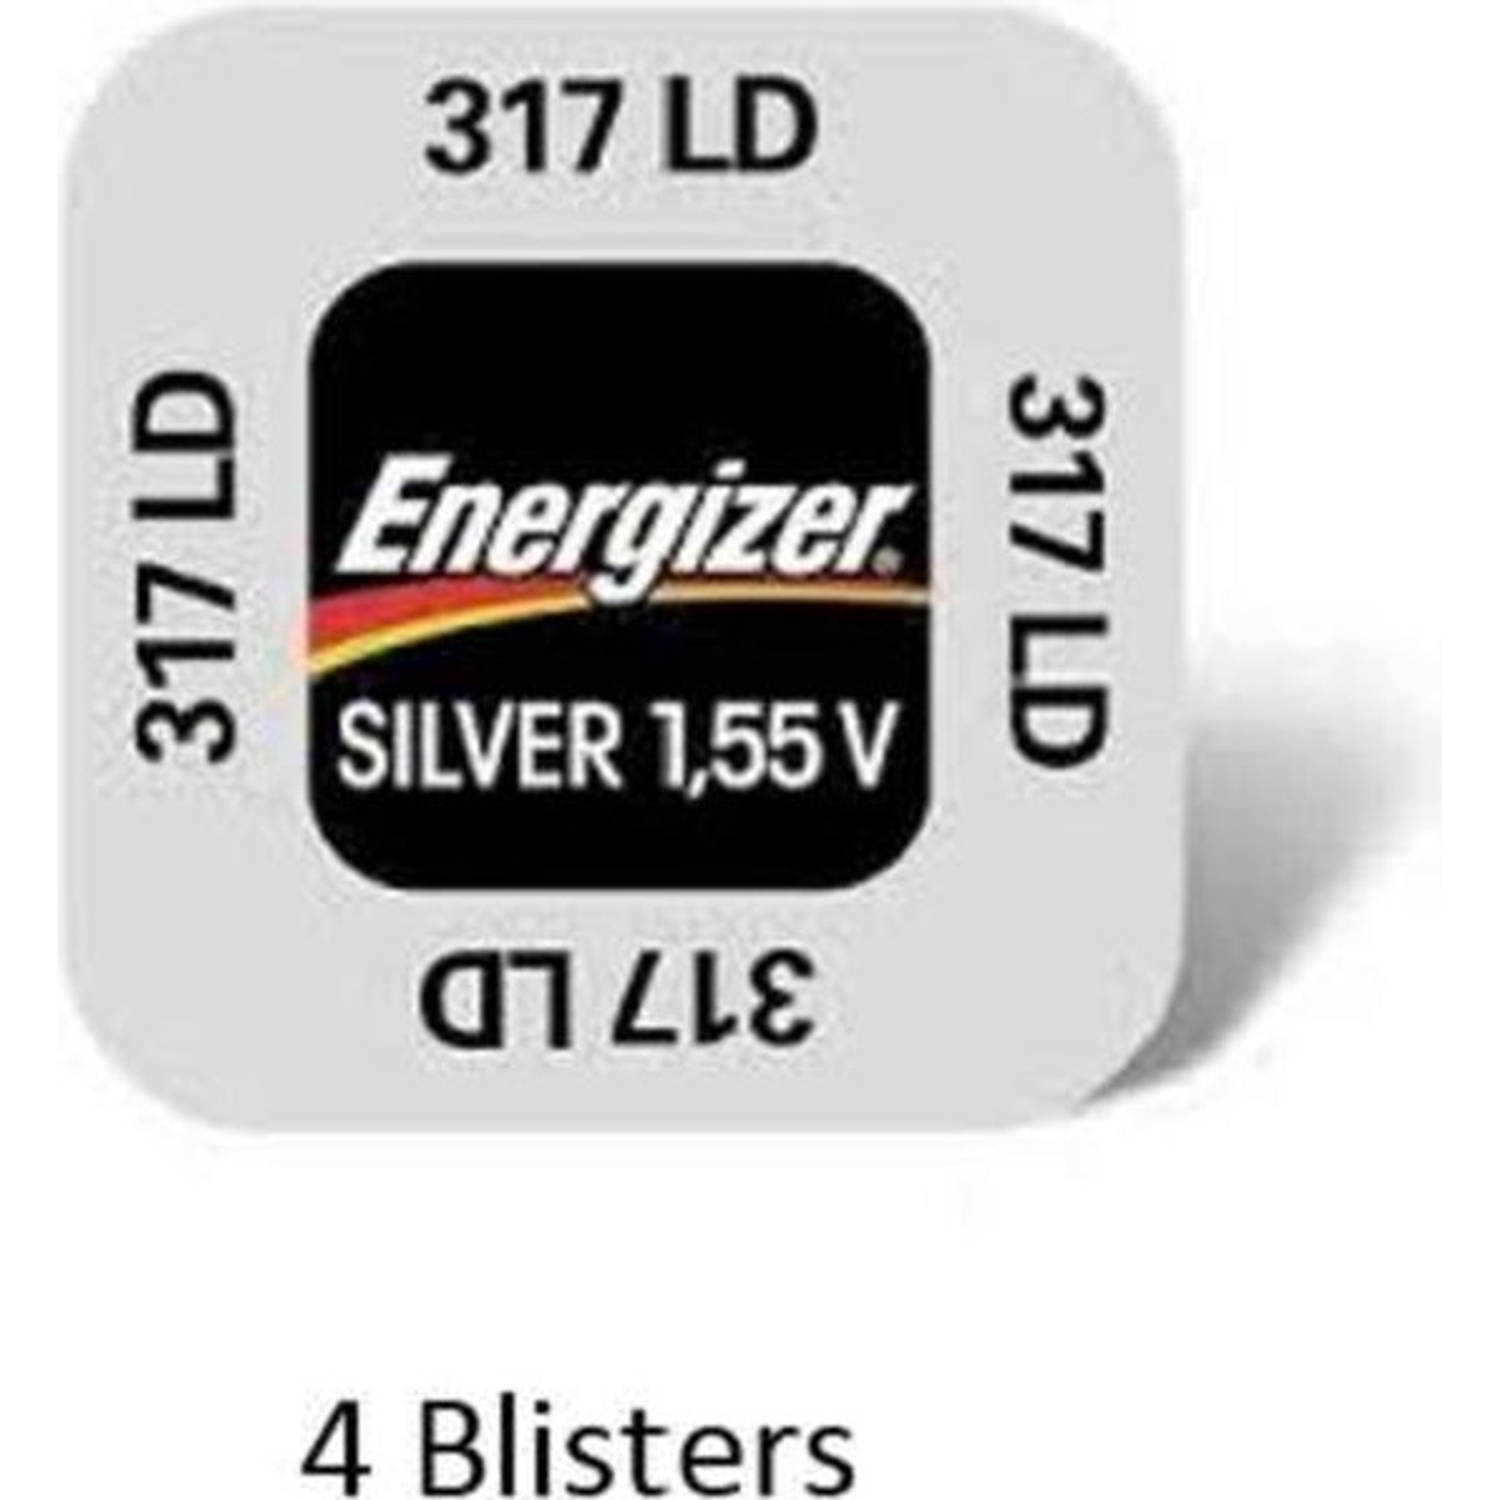 Energizer 4 Stuks (4 Blisters A 1 Stuk) Zilver Oxide Knoopcel 317 Ld 1.55v